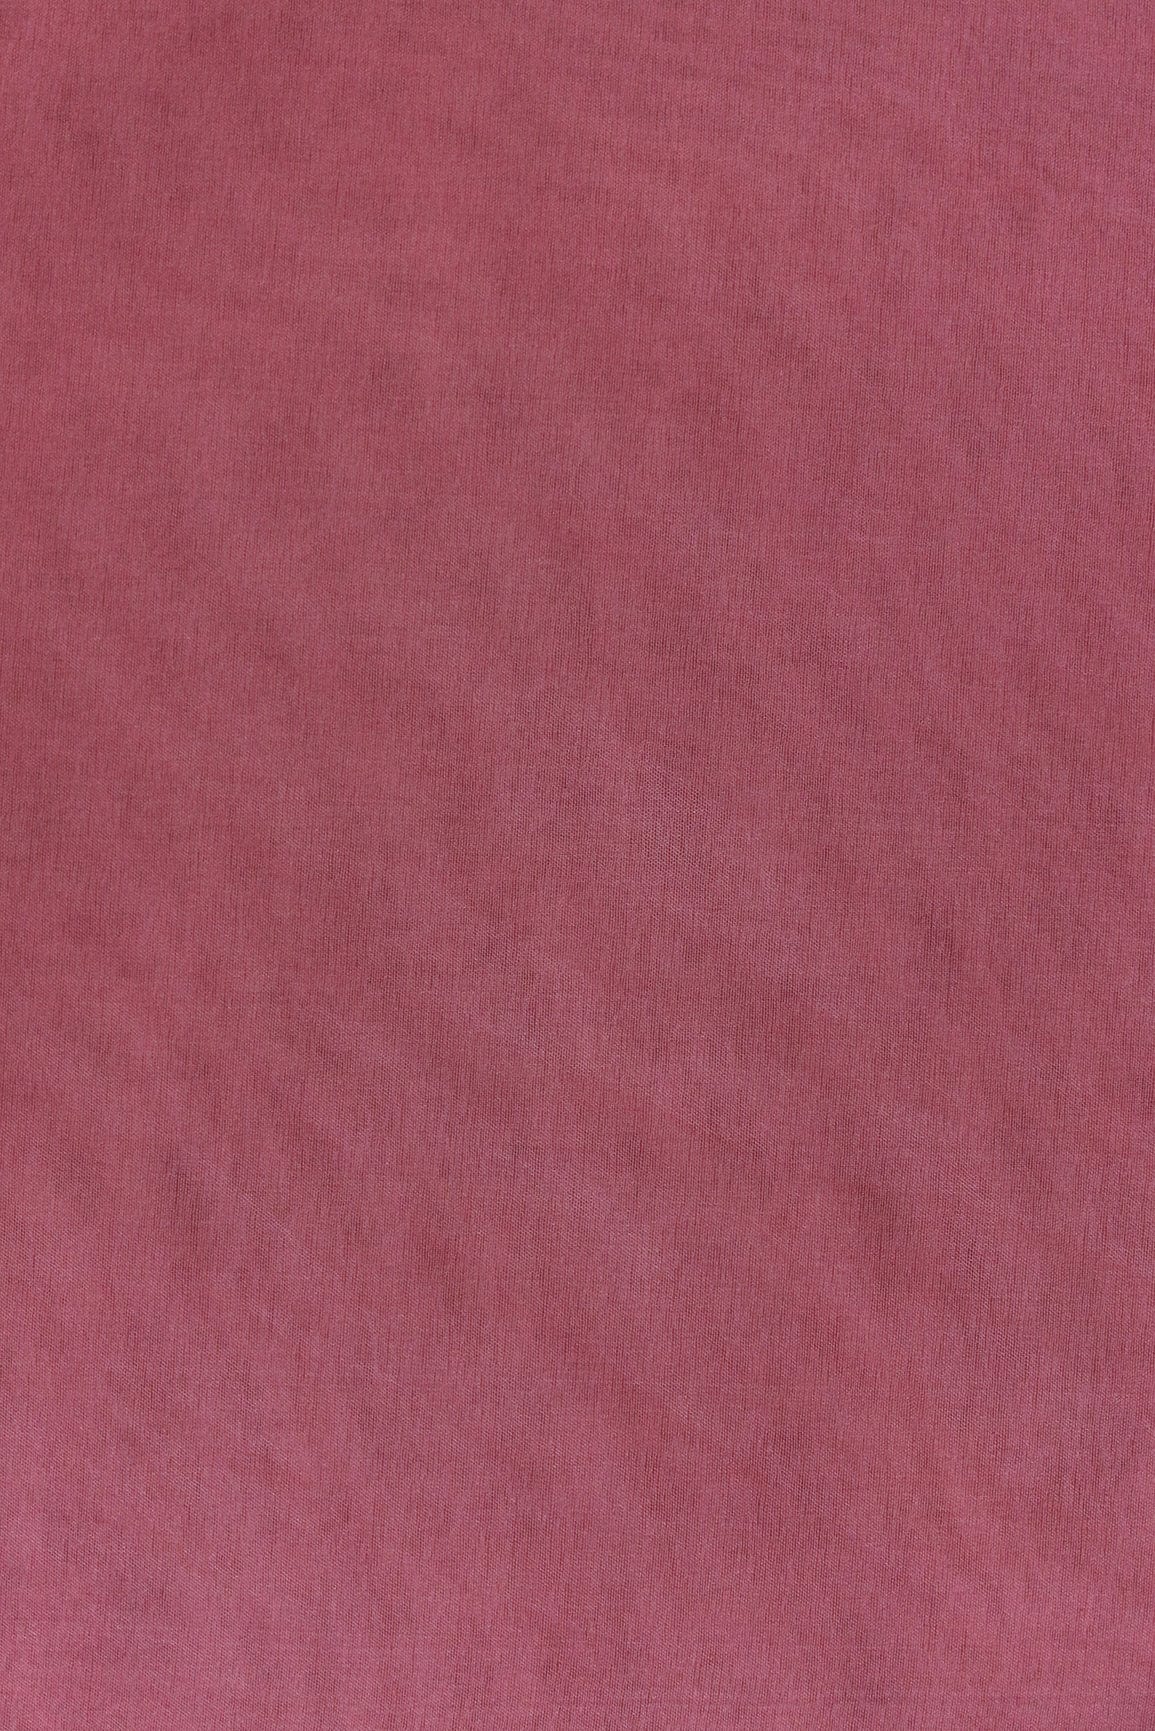 doeraa Plain Dyed Fabrics Pink Dyed Organza Fabric